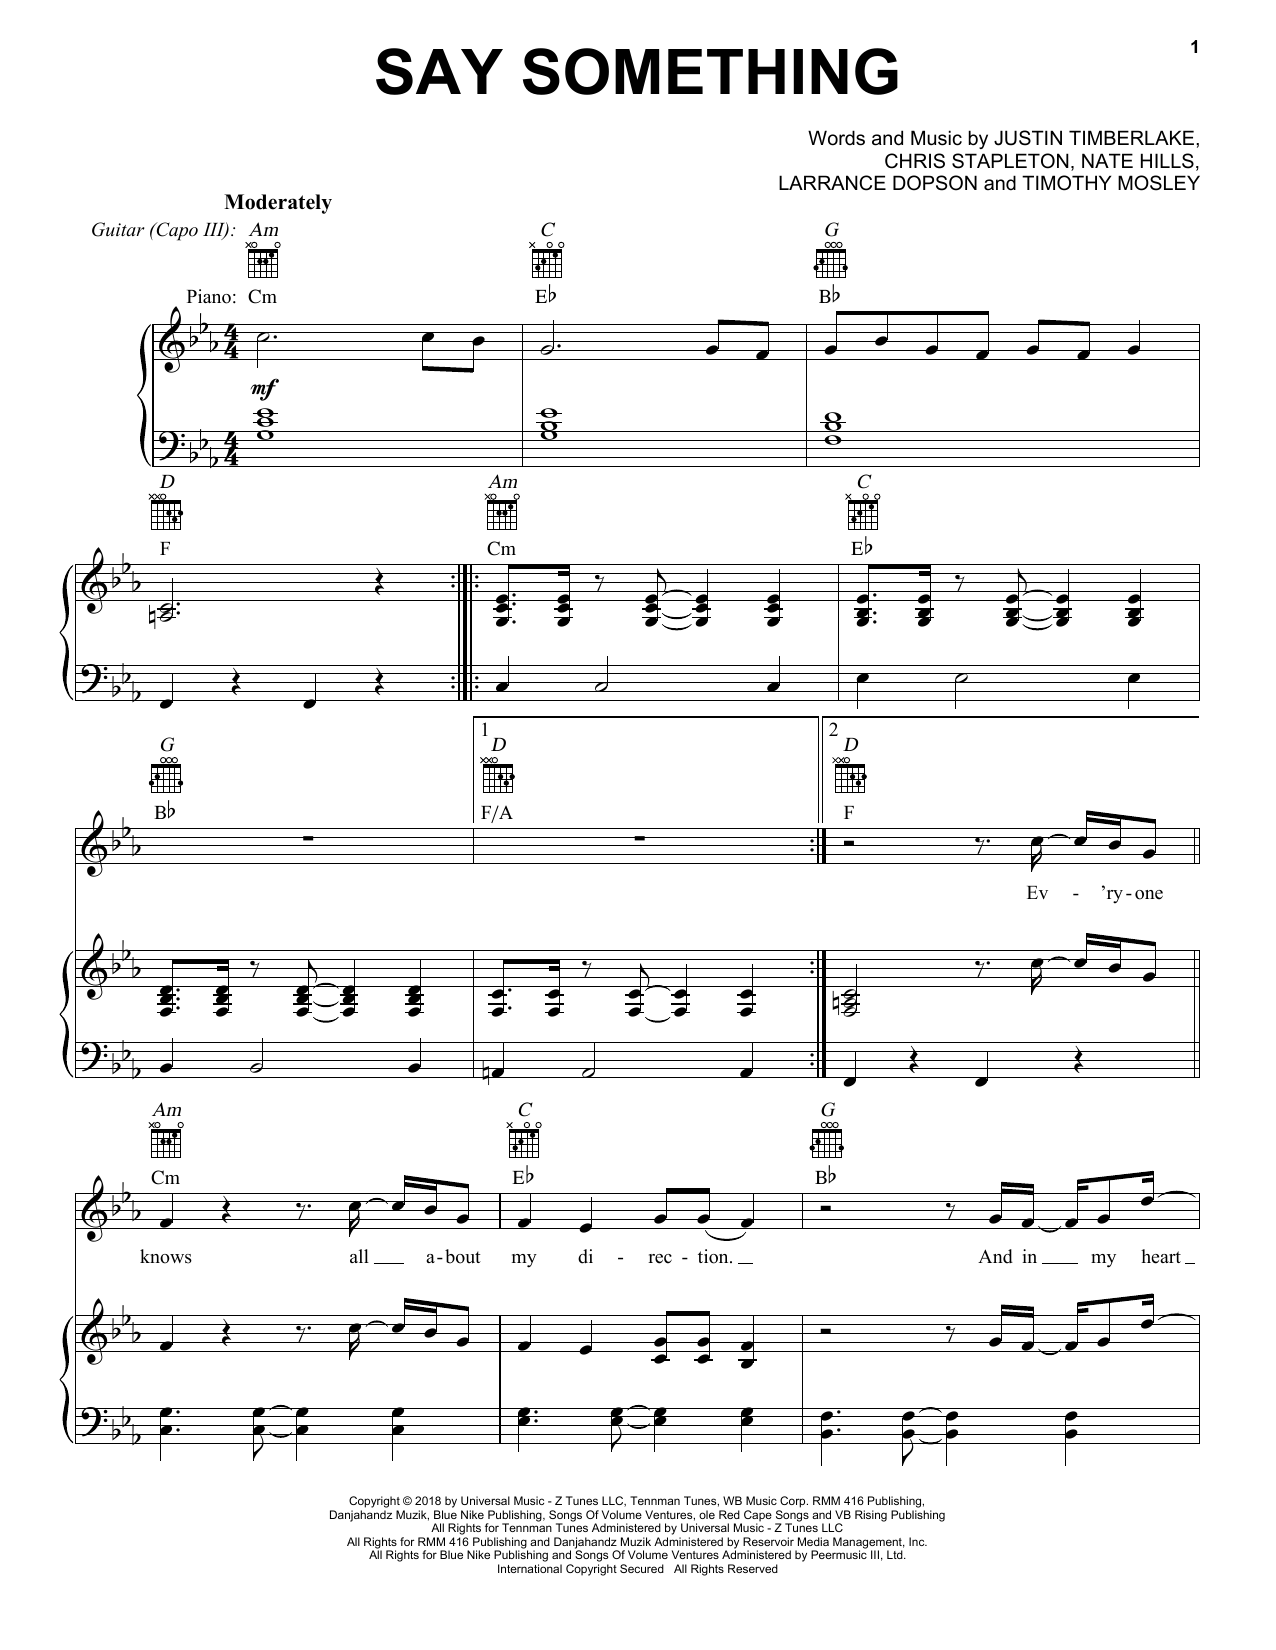 Justin Timberlake Say Something (feat. Chris Stapleton) Sheet Music Notes & Chords for Easy Piano - Download or Print PDF